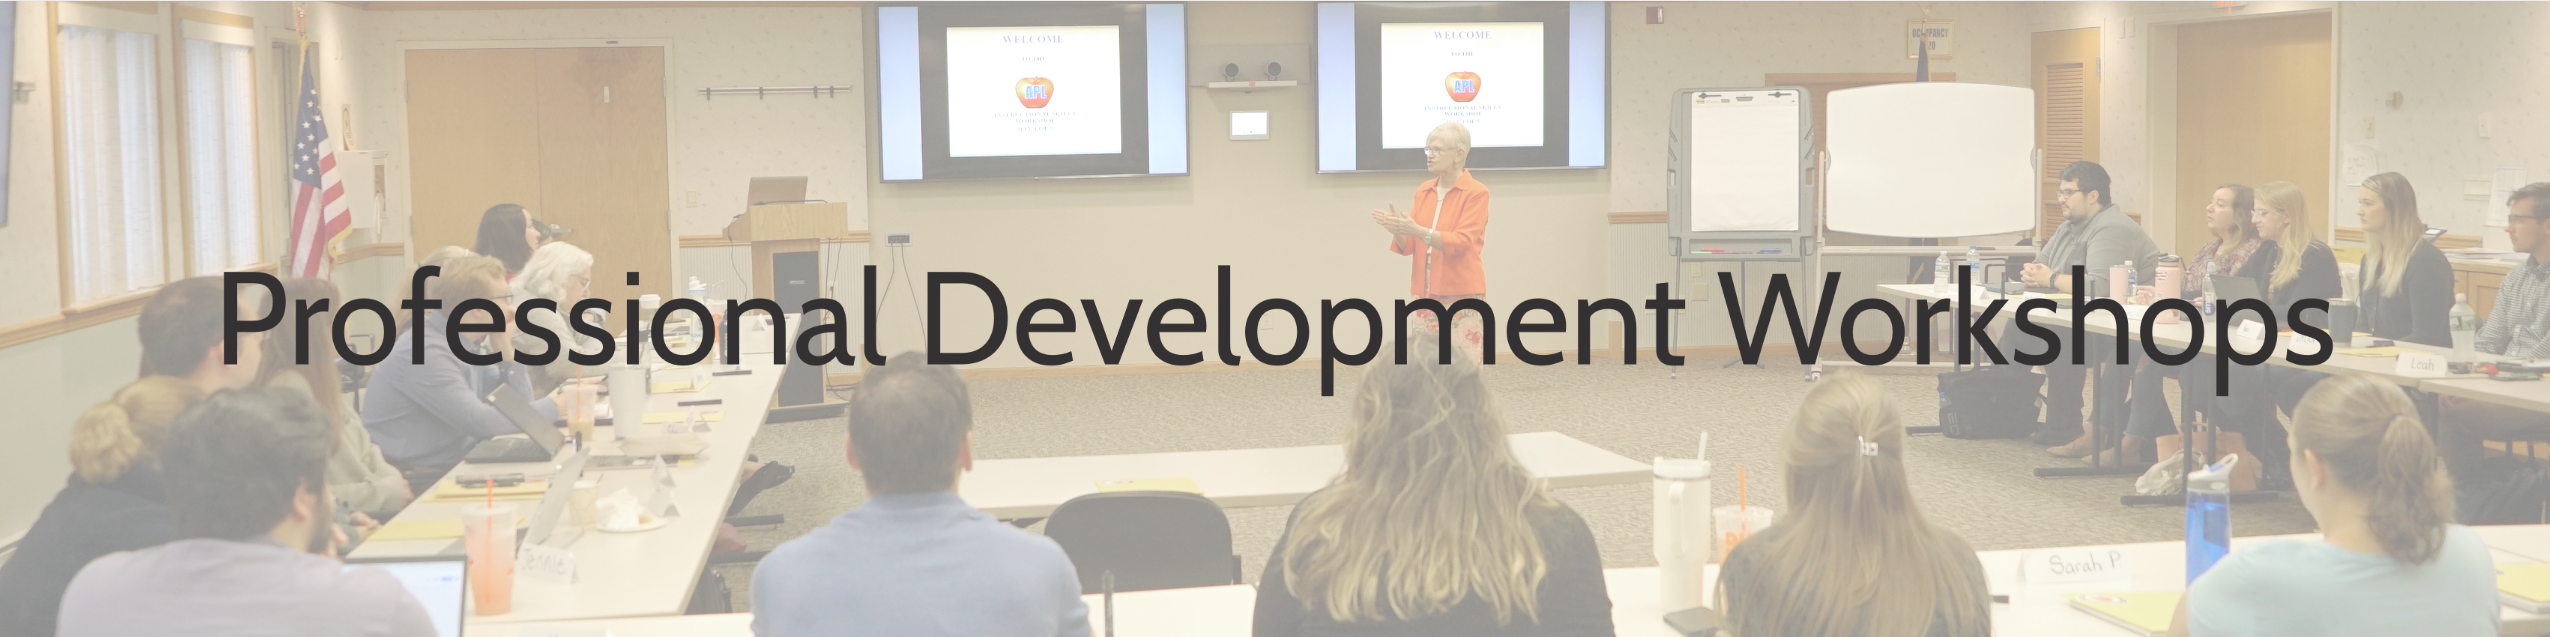 Professional Development Workshops 